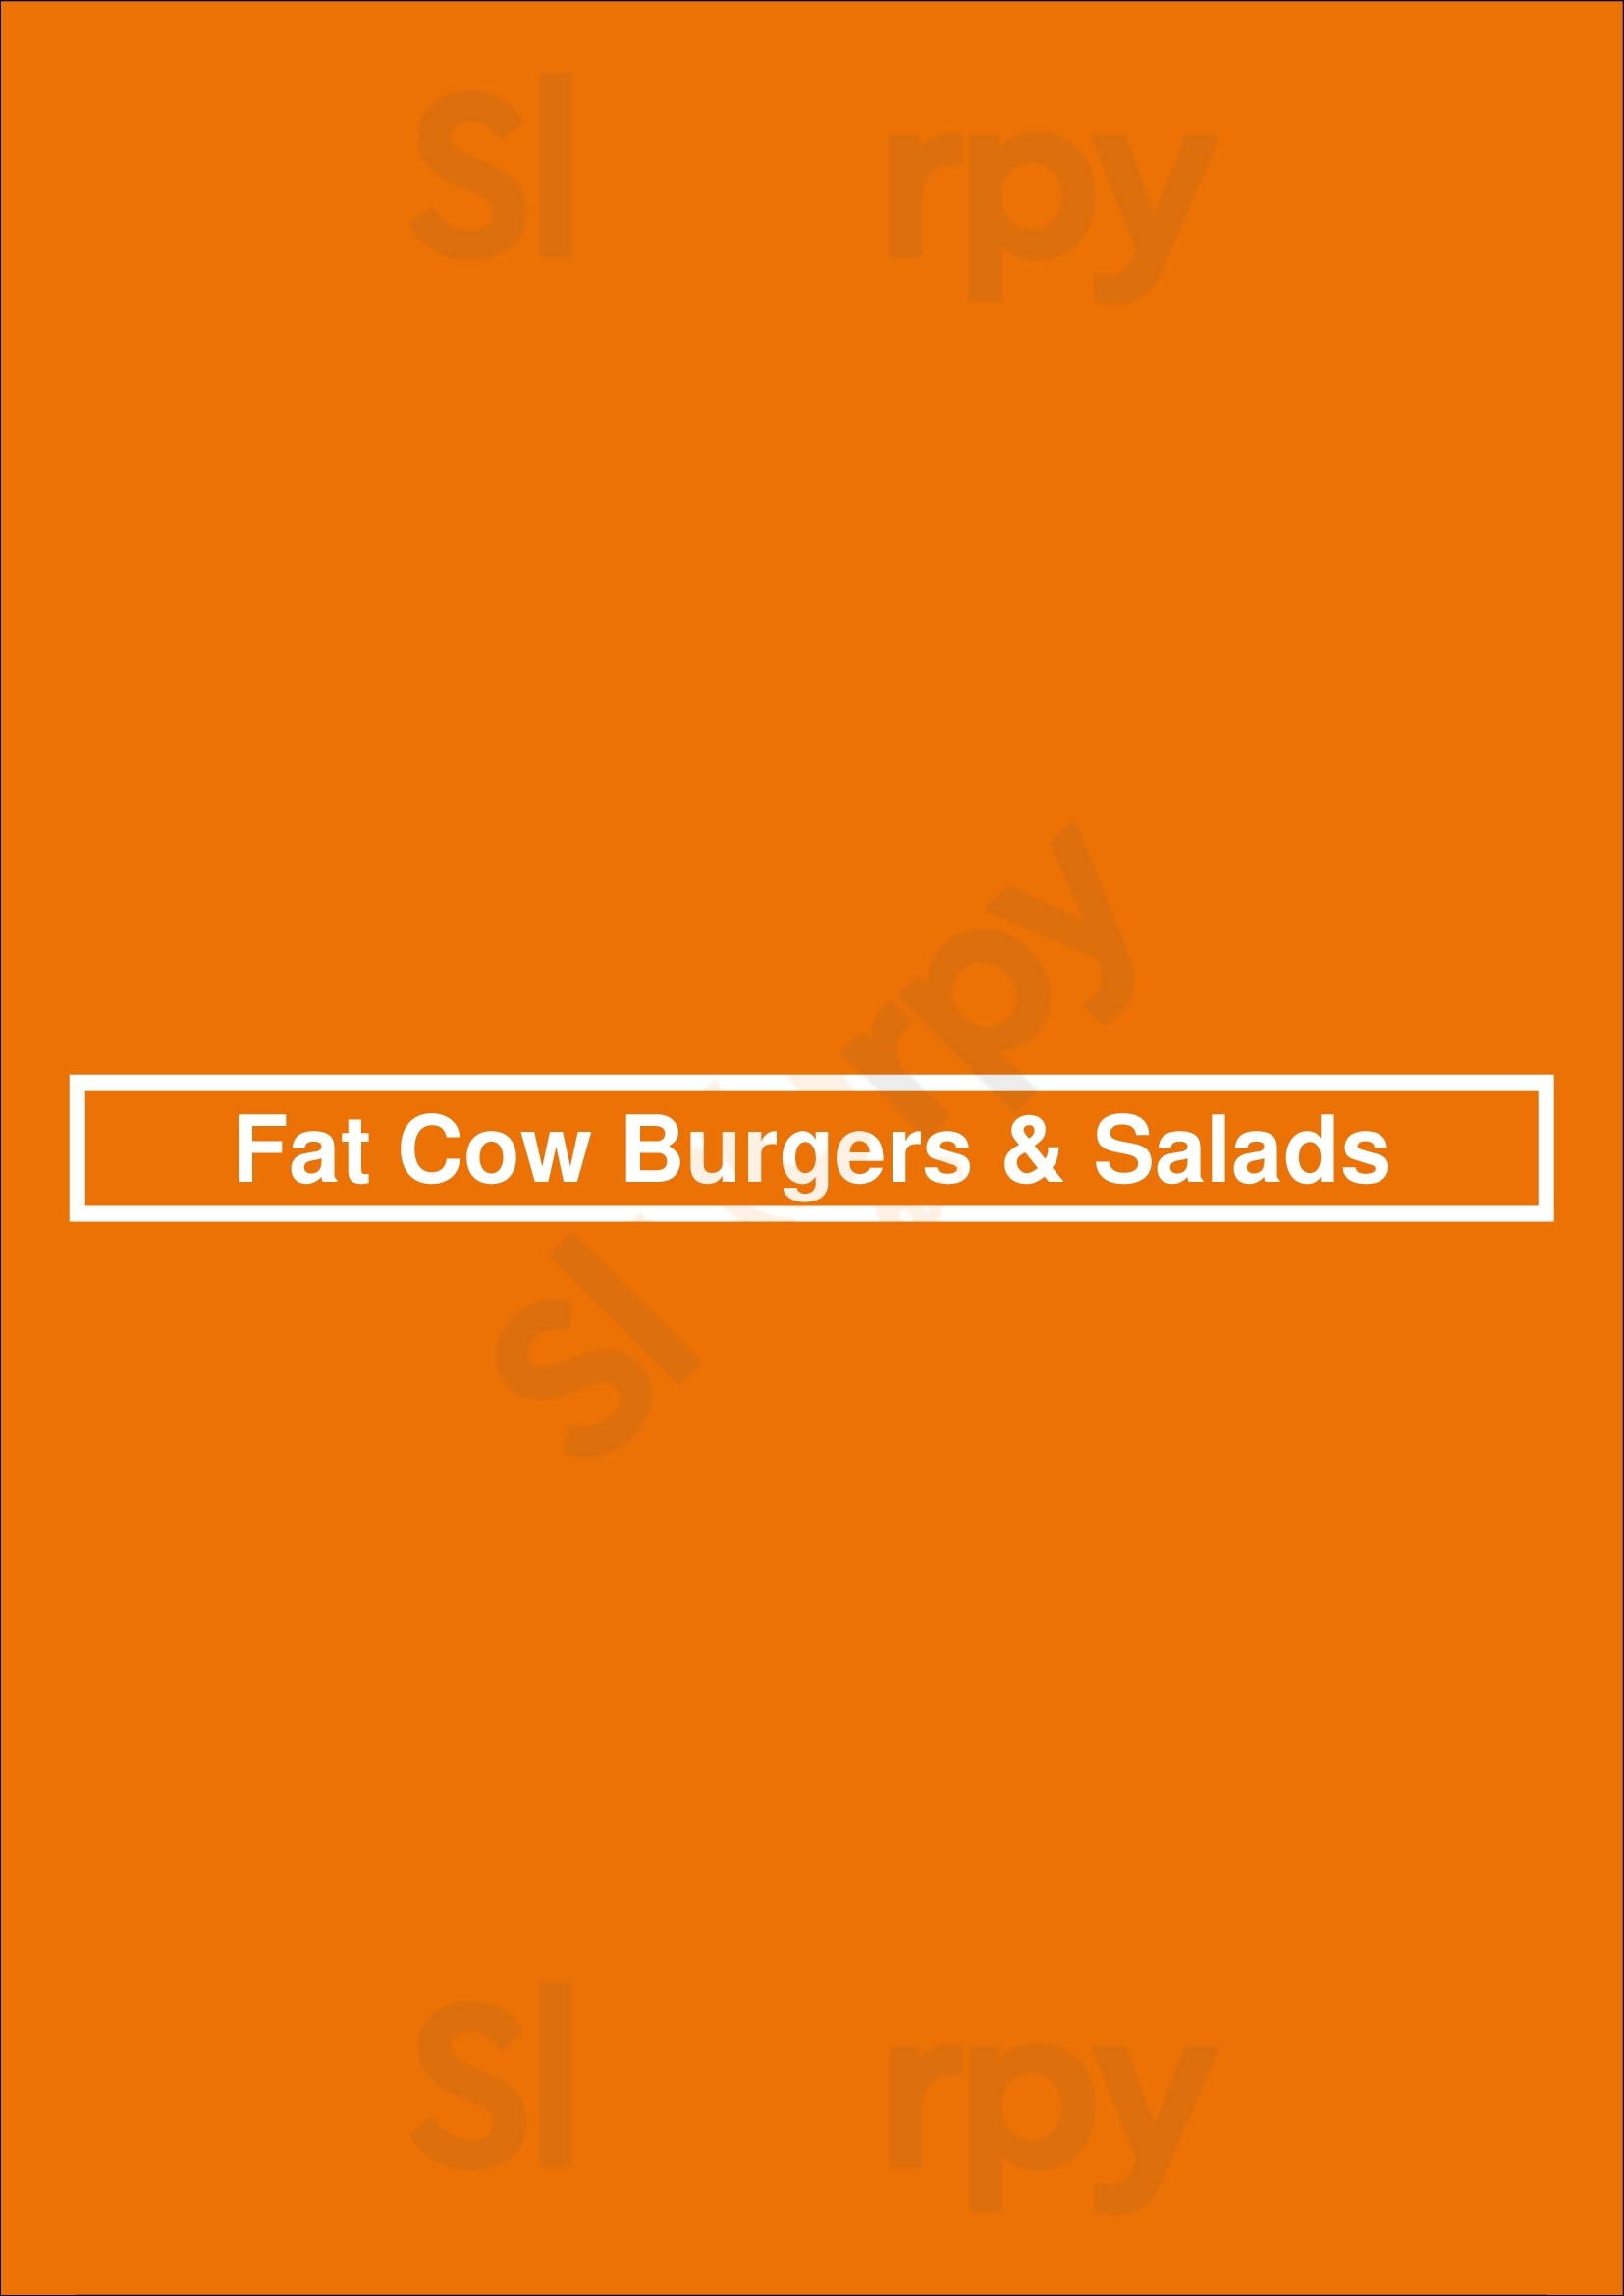 Fat Cow Burgers & Salads Baton Rouge Menu - 1